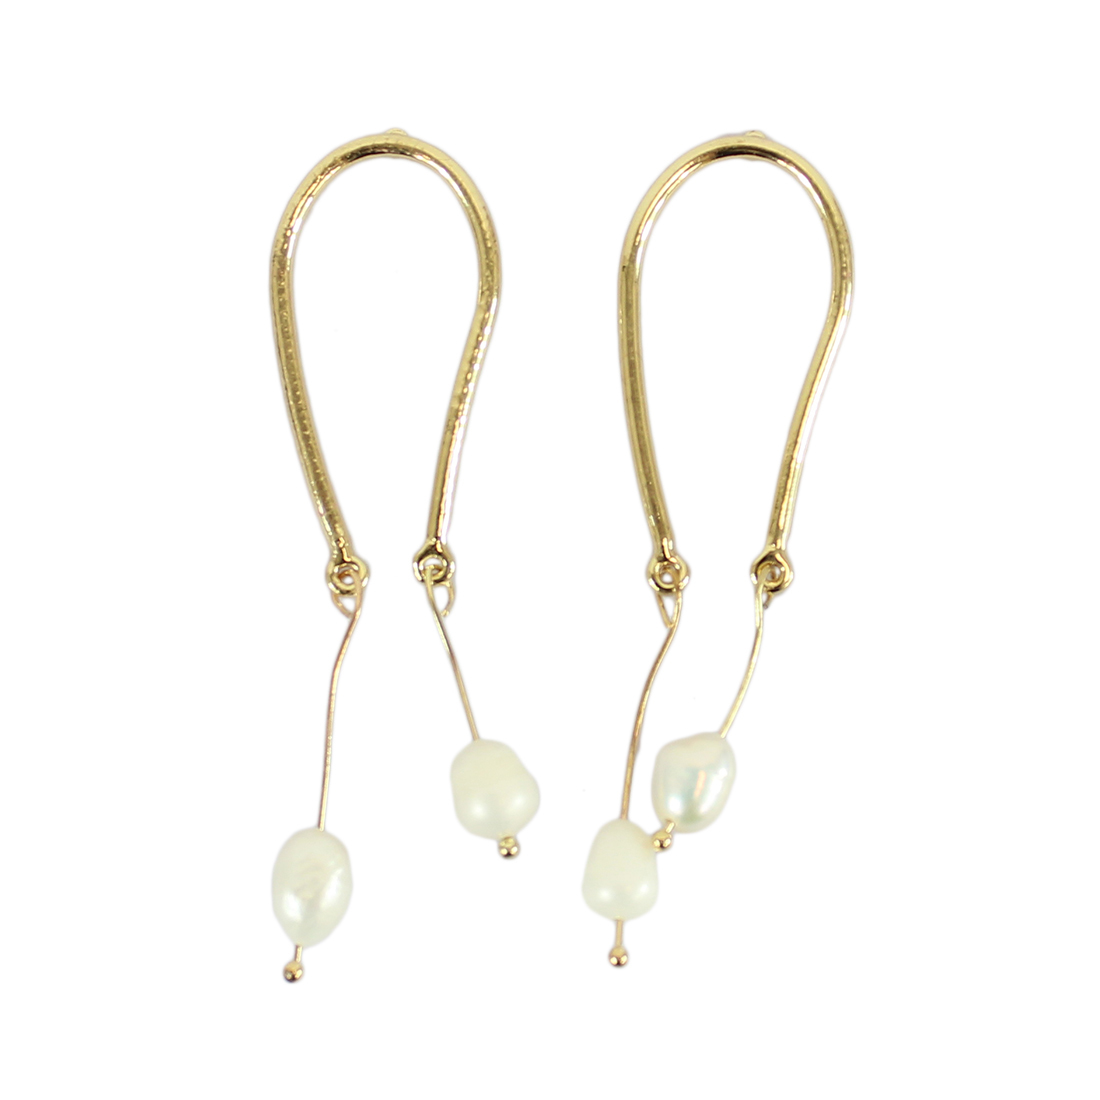 Dangle earrings with pearls